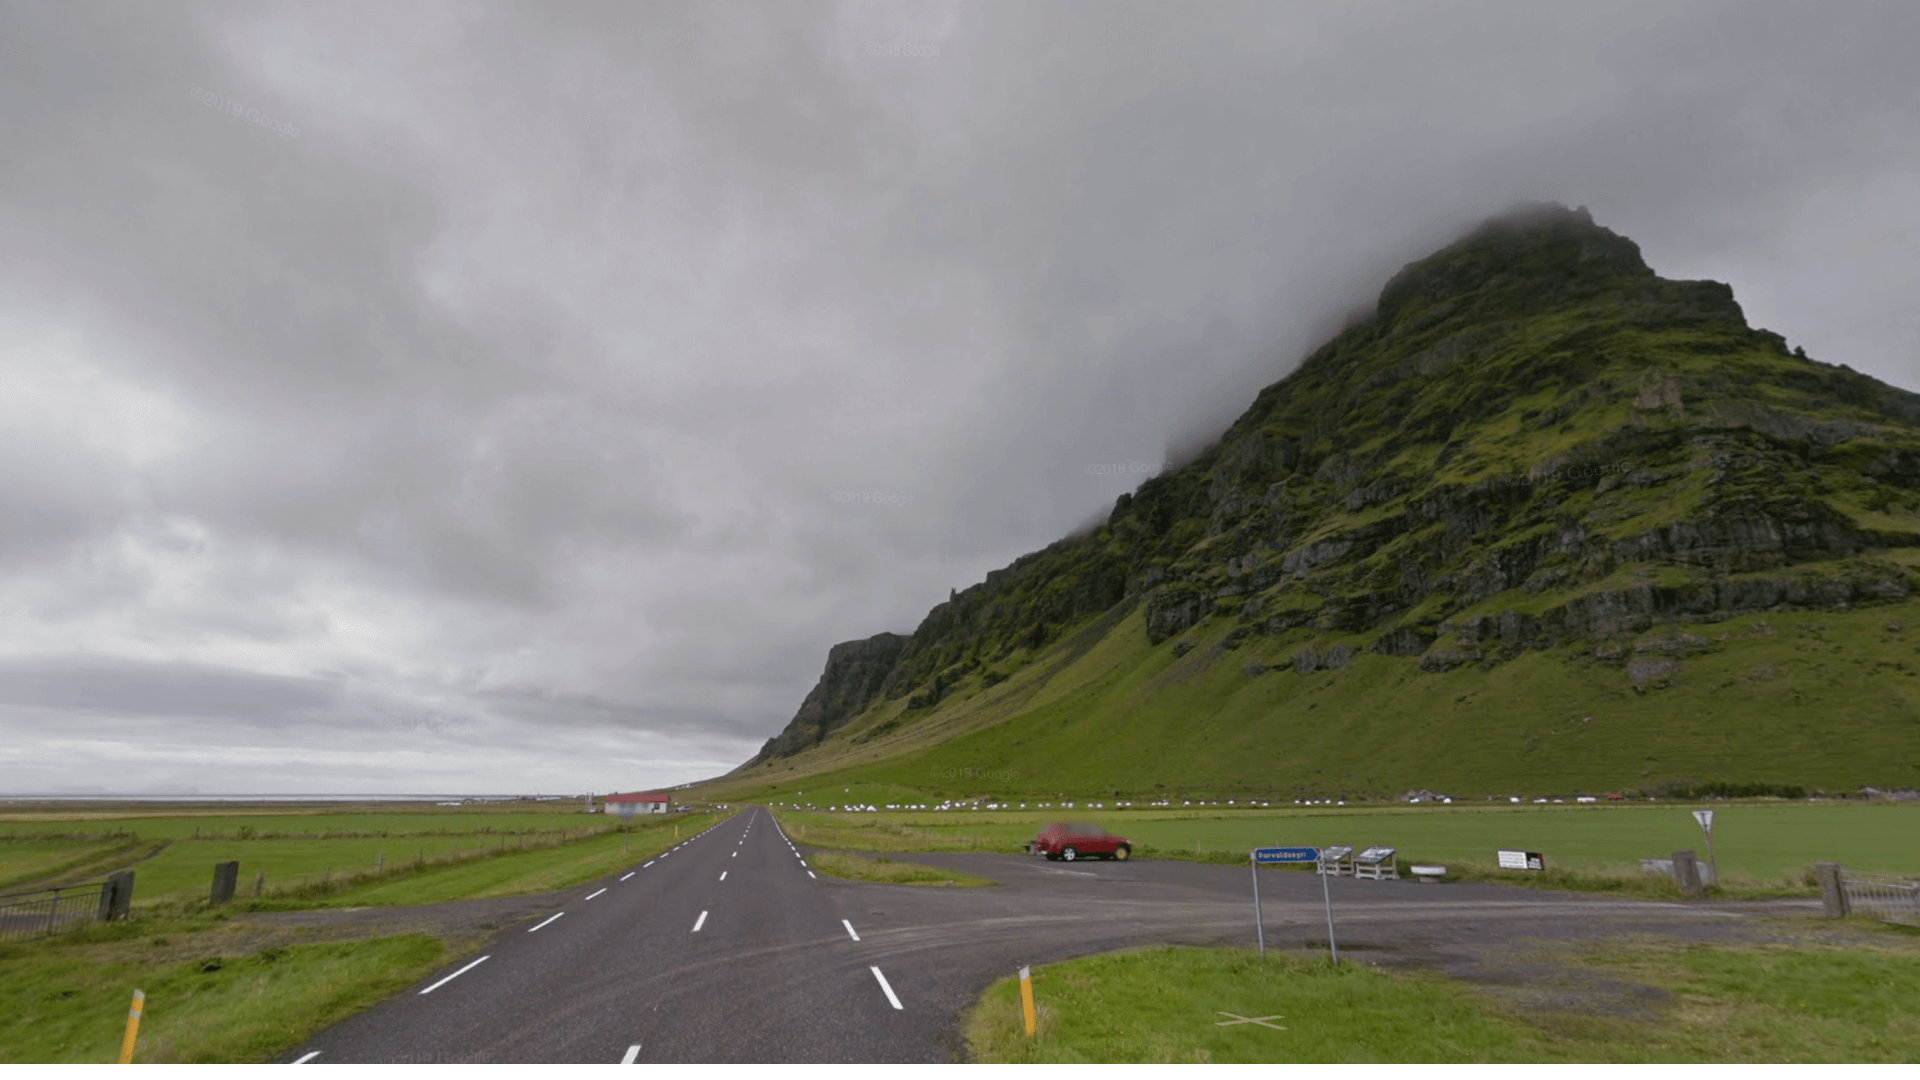 Eyjafjallajökull street view